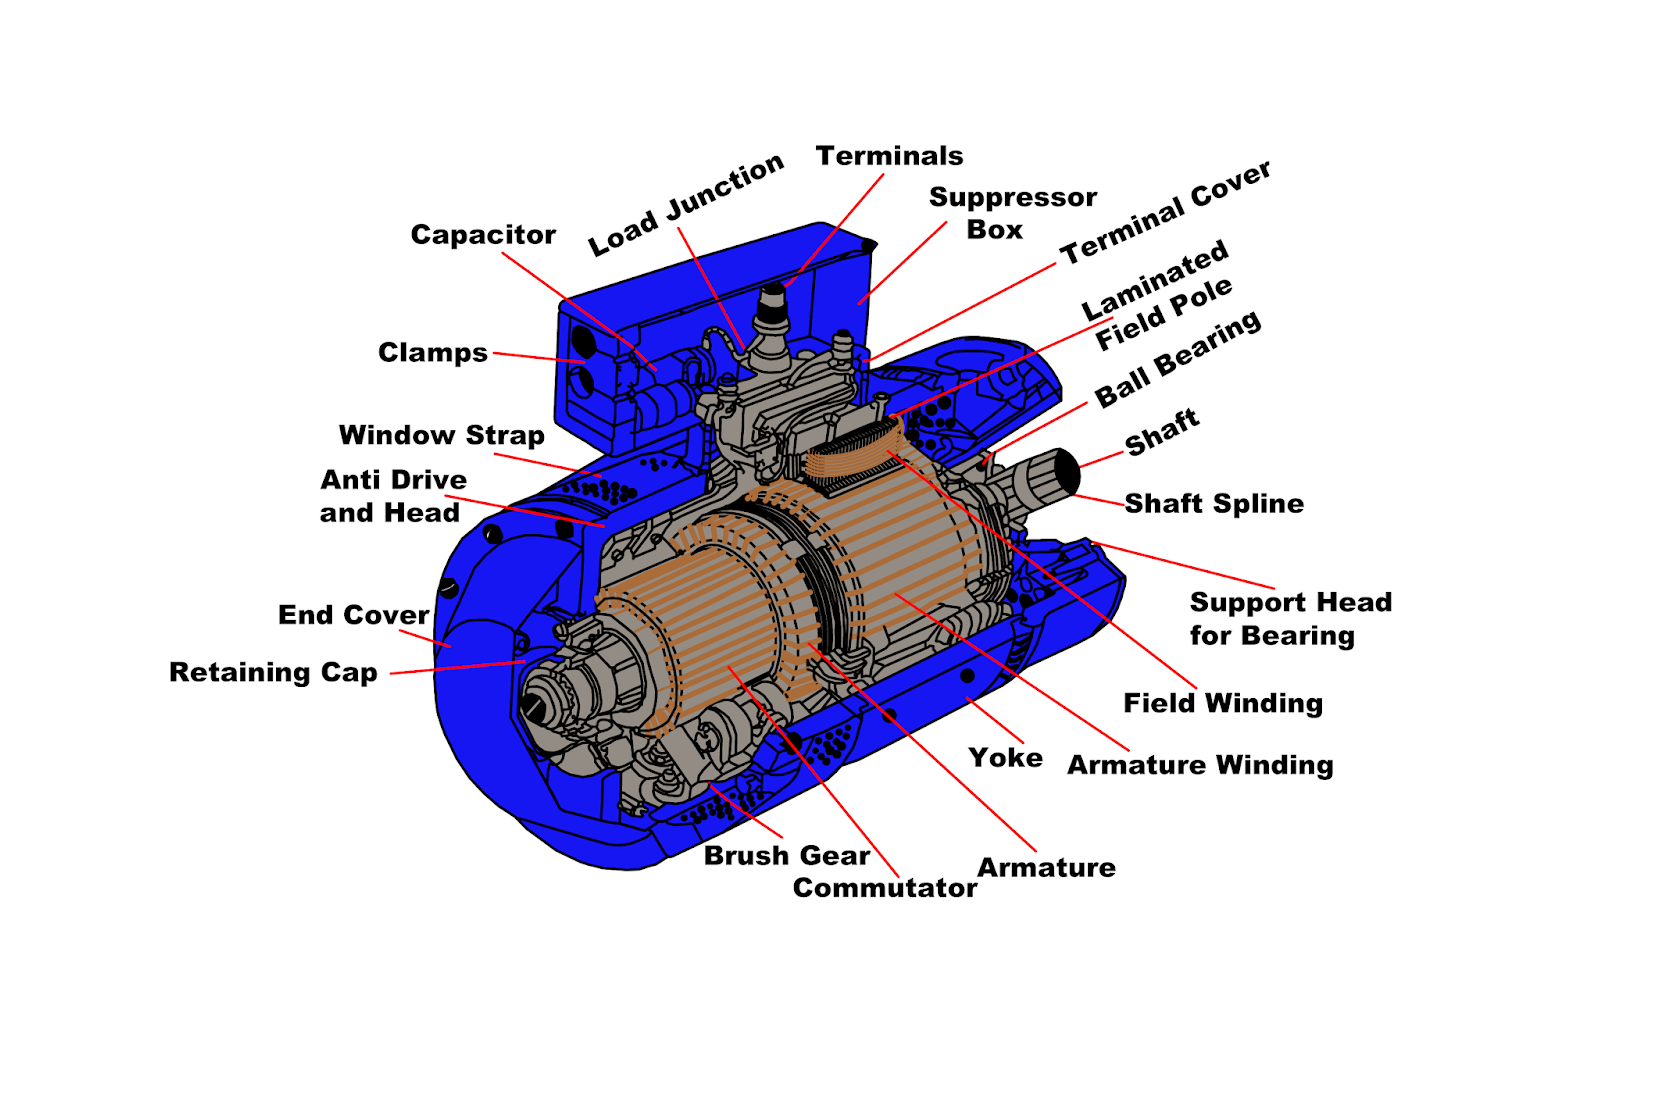 8 Different DC Motor Parts, Structure, Design and Advantages + PDF